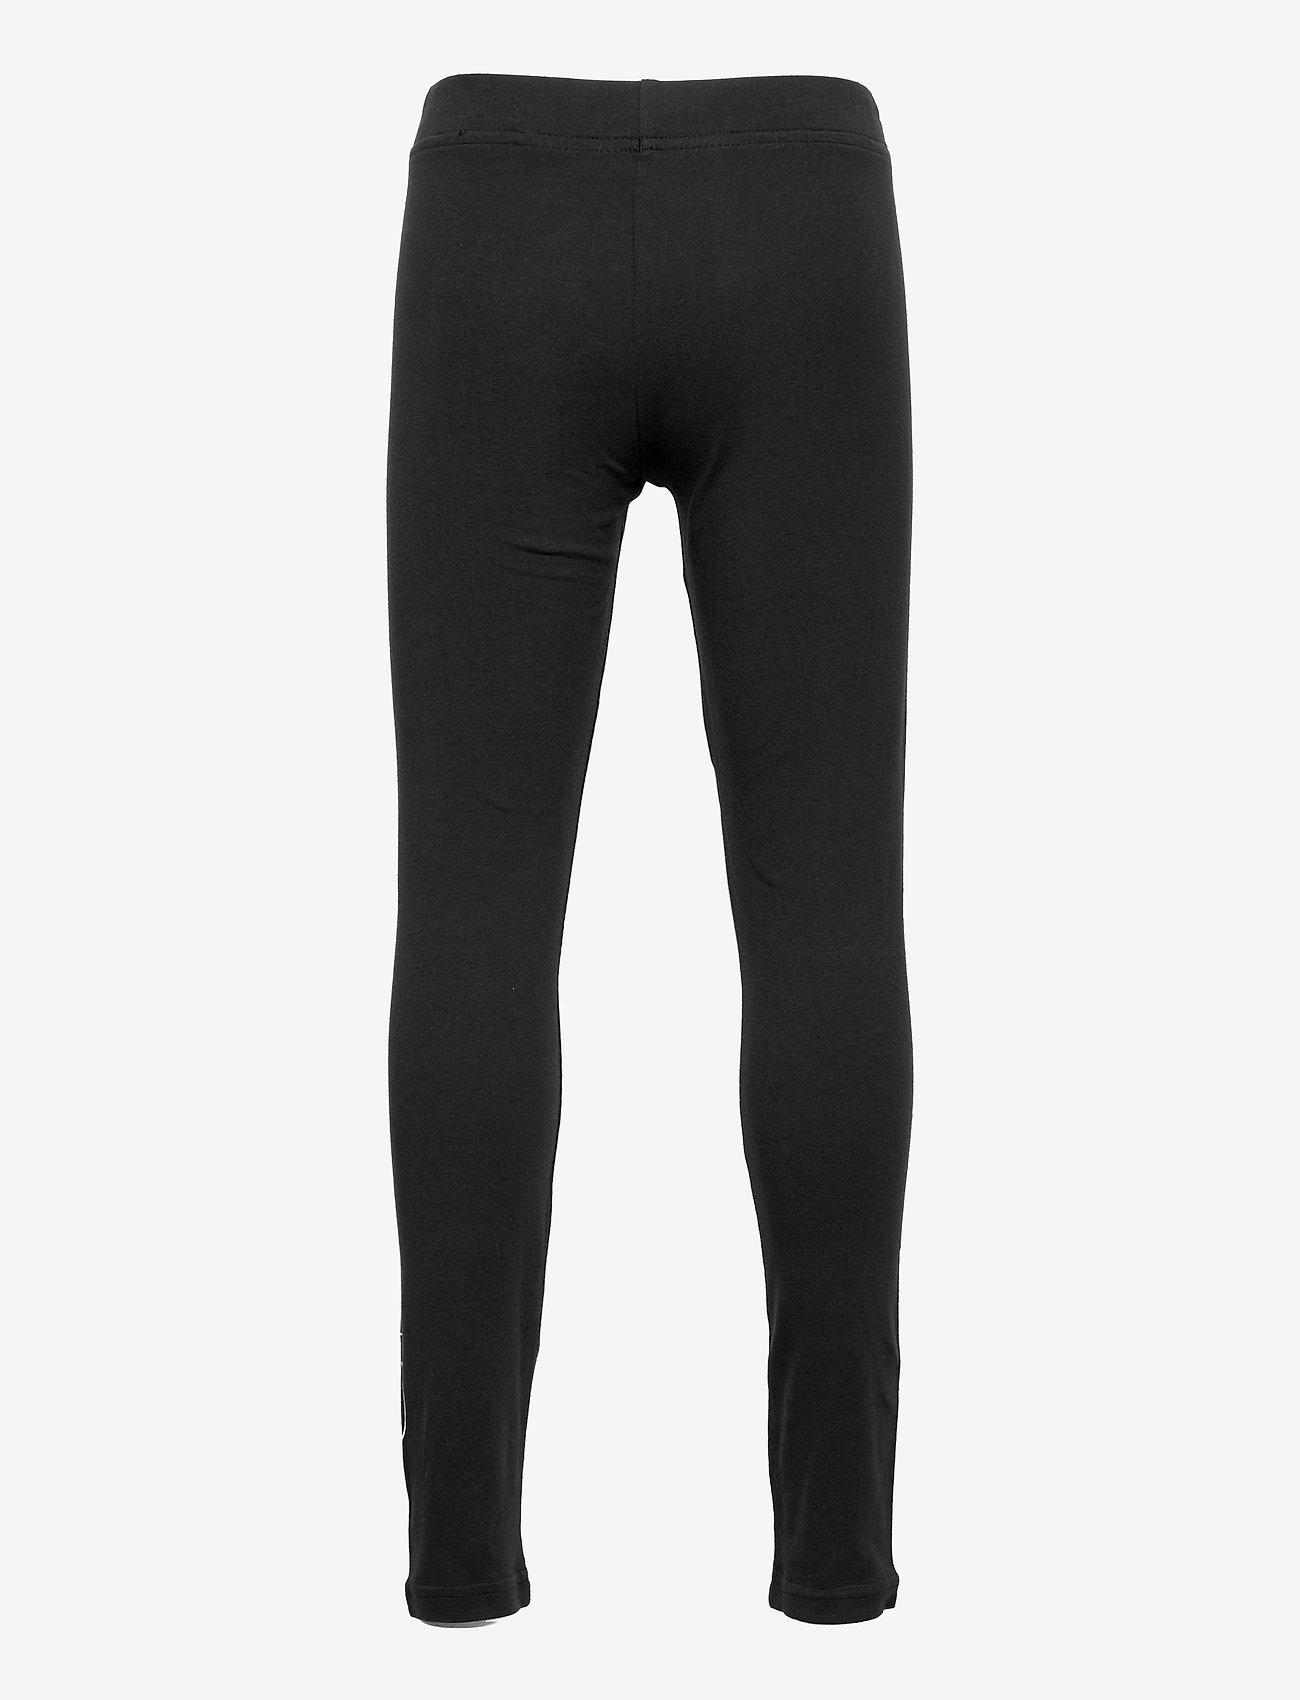 adidas Sportswear - adidas Essentials Leggings - leggingsit - black/white - 1